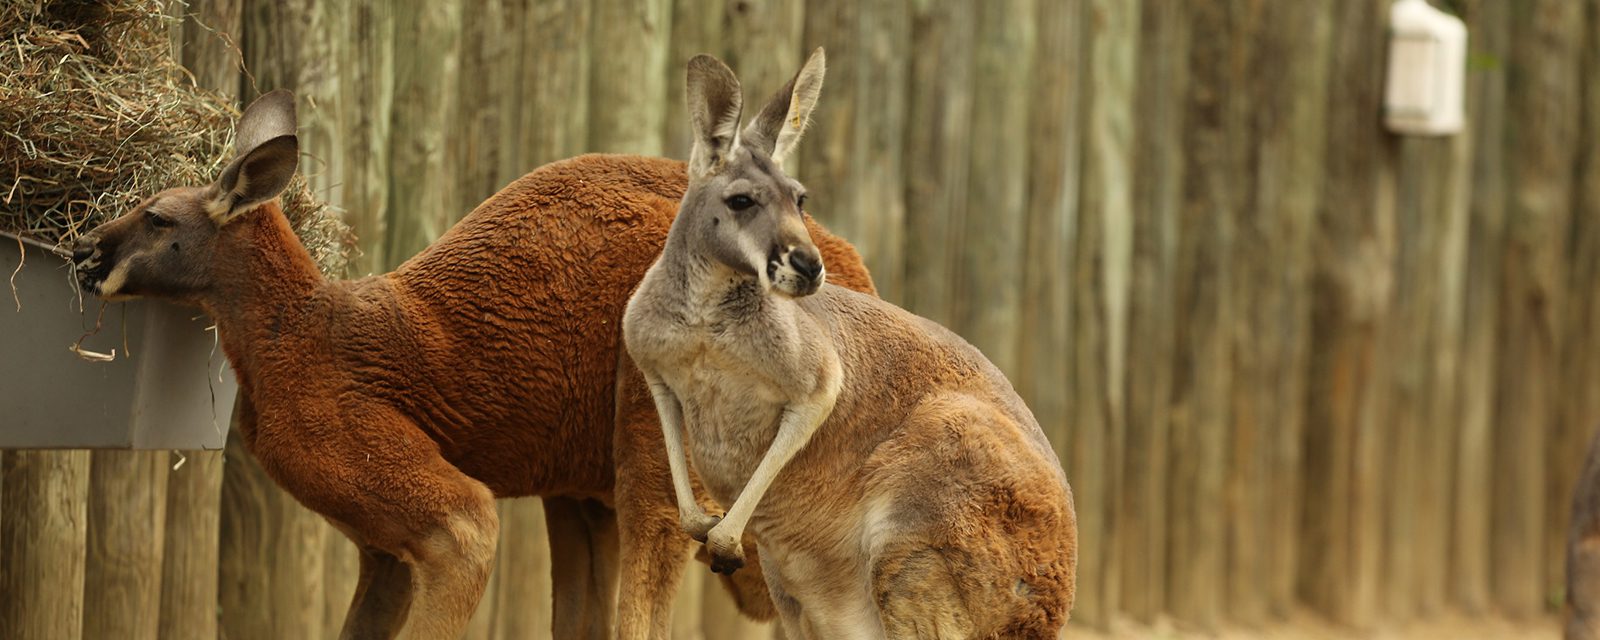 Red kangaroo in exhibit